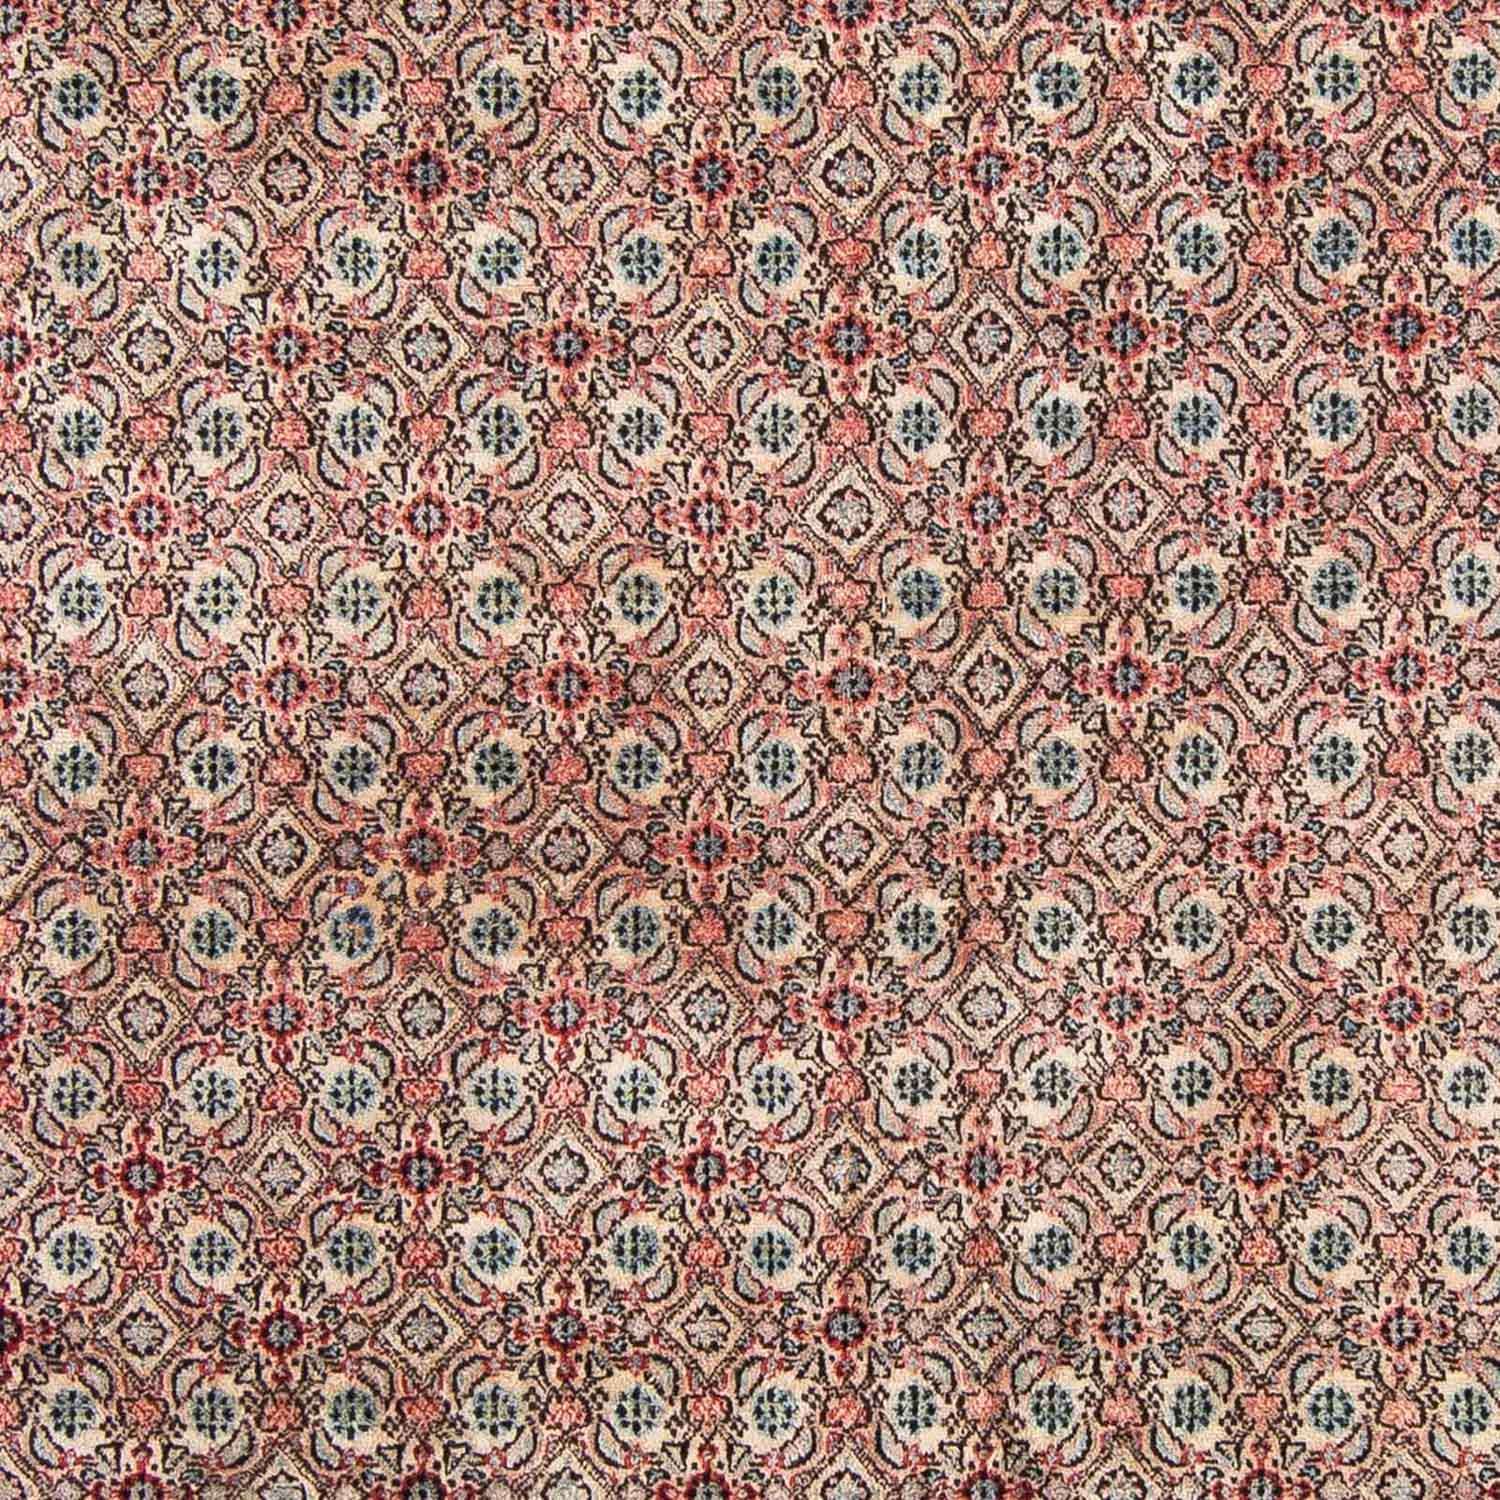 Tapis persan - Classique - 296 x 207 cm - rouge clair